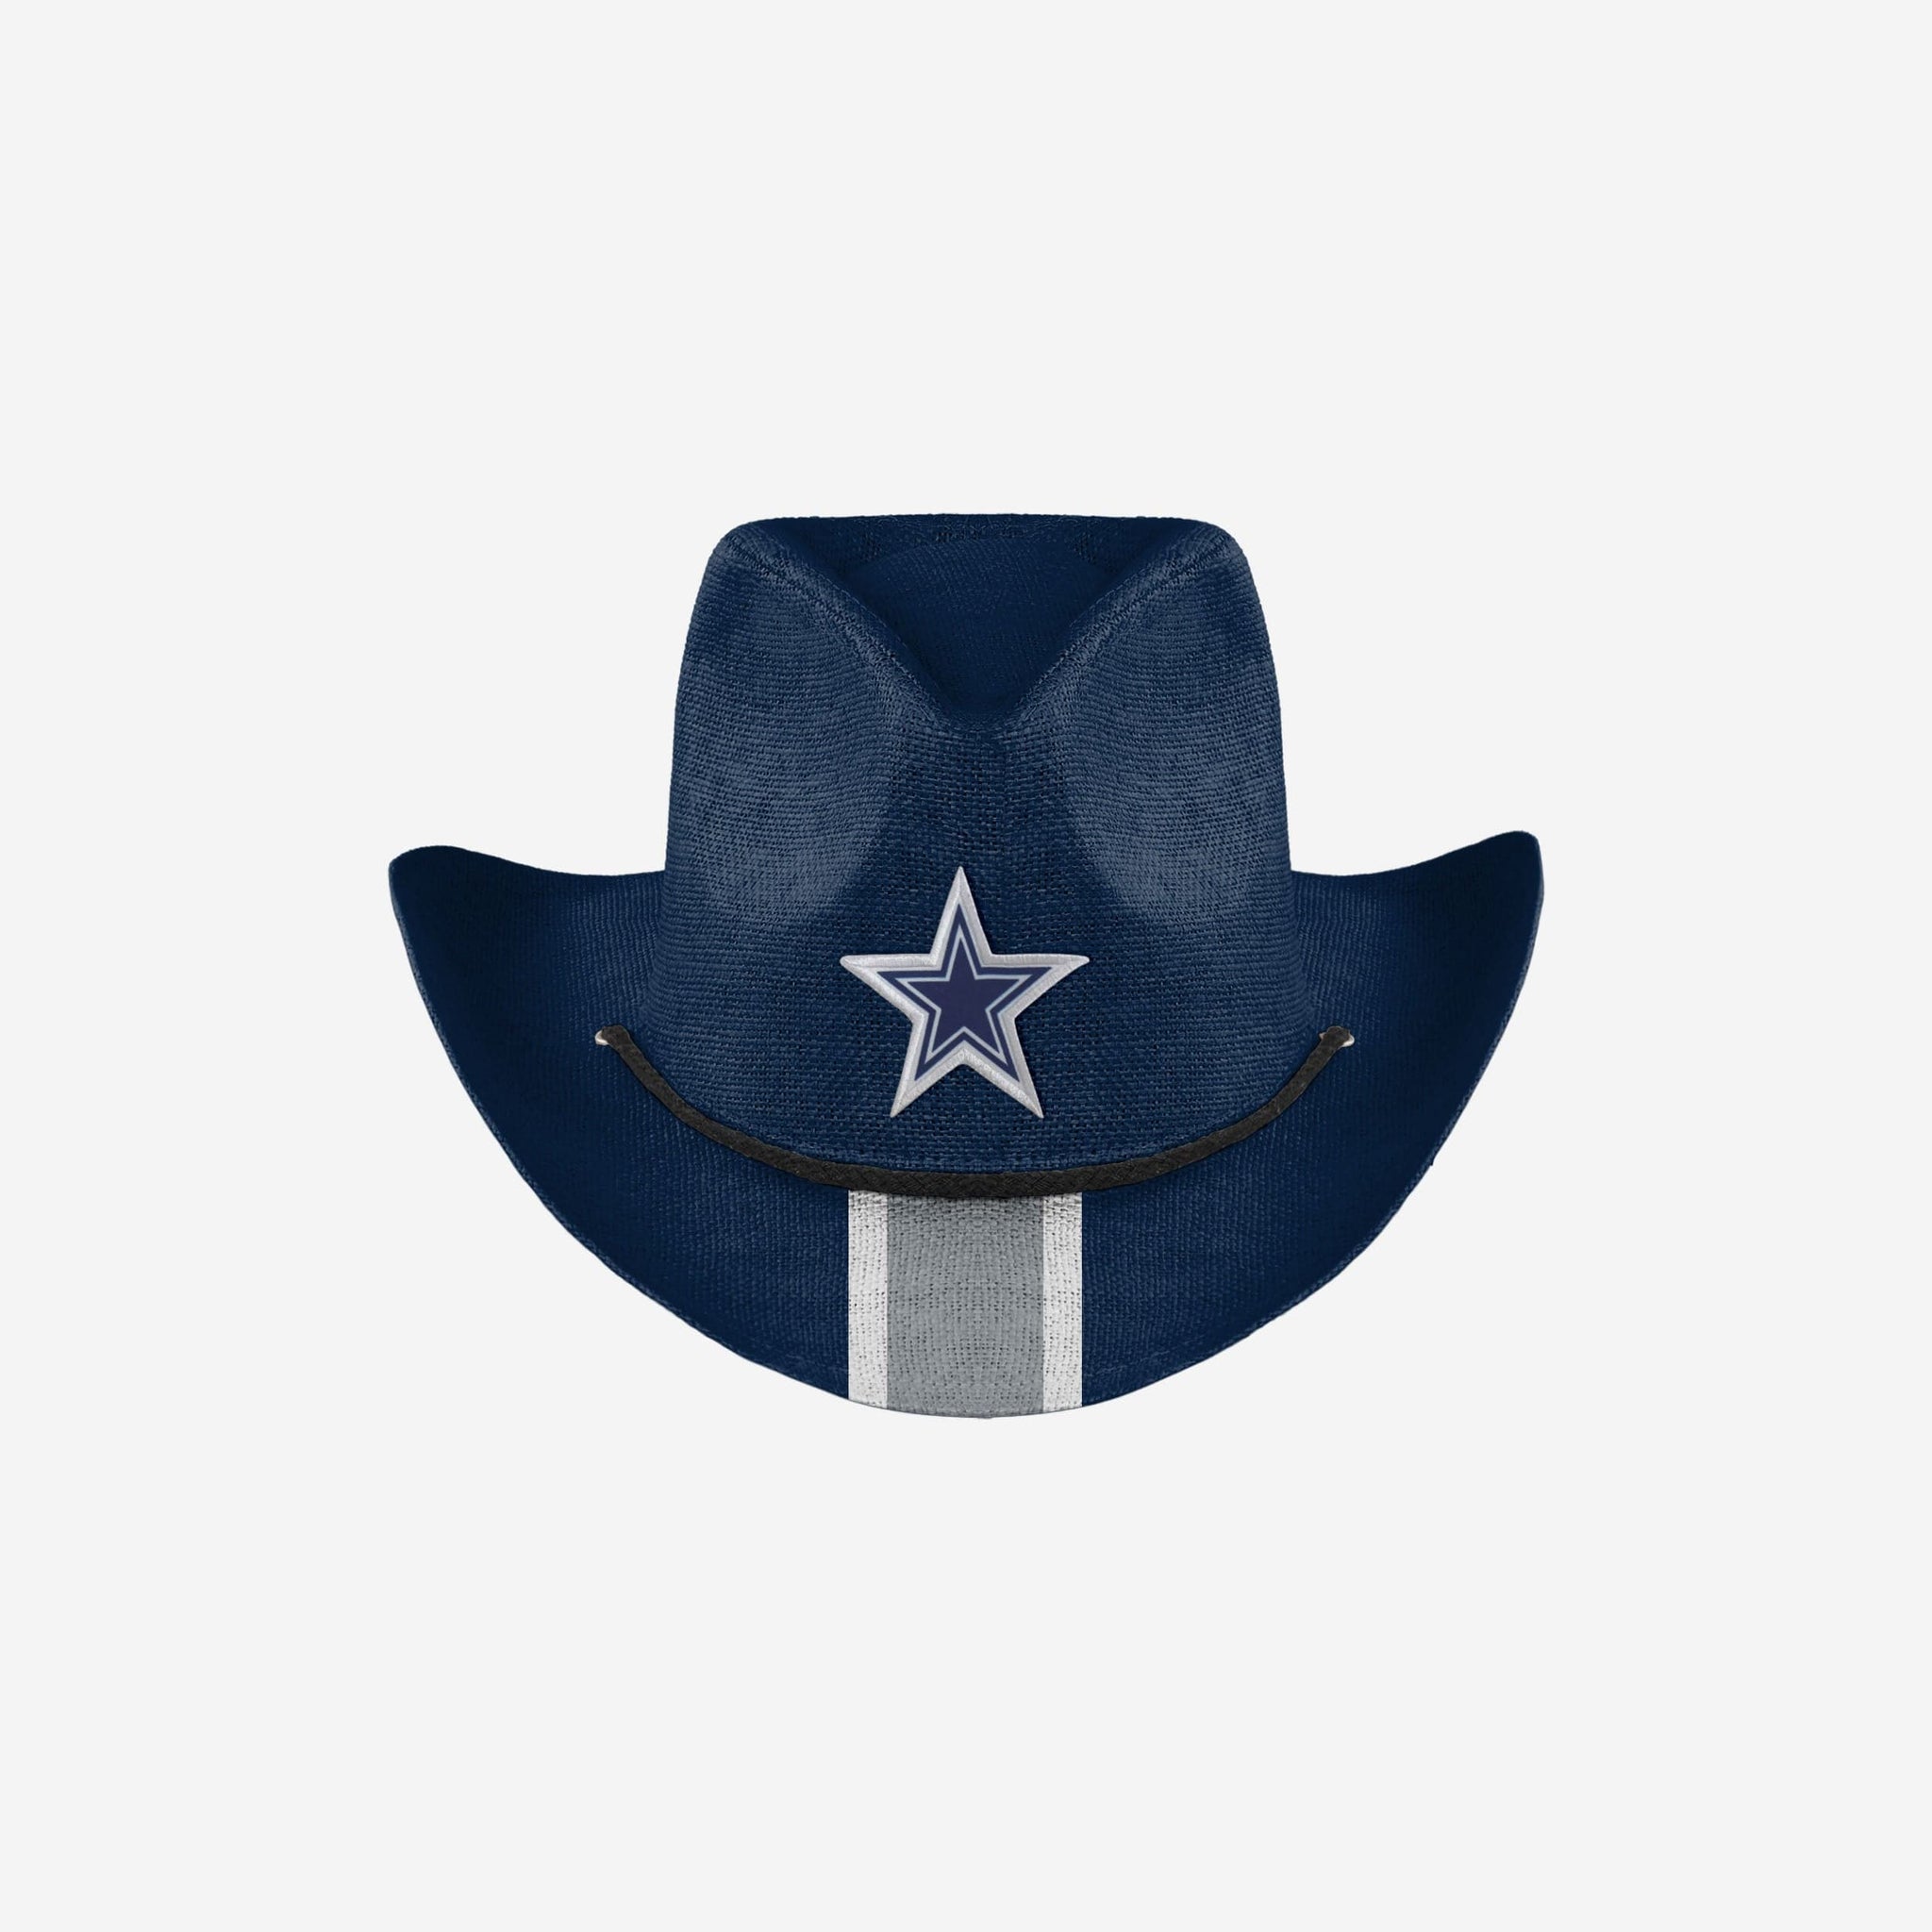 Dallas Cowboys Custom Team Authentic T Shirt 